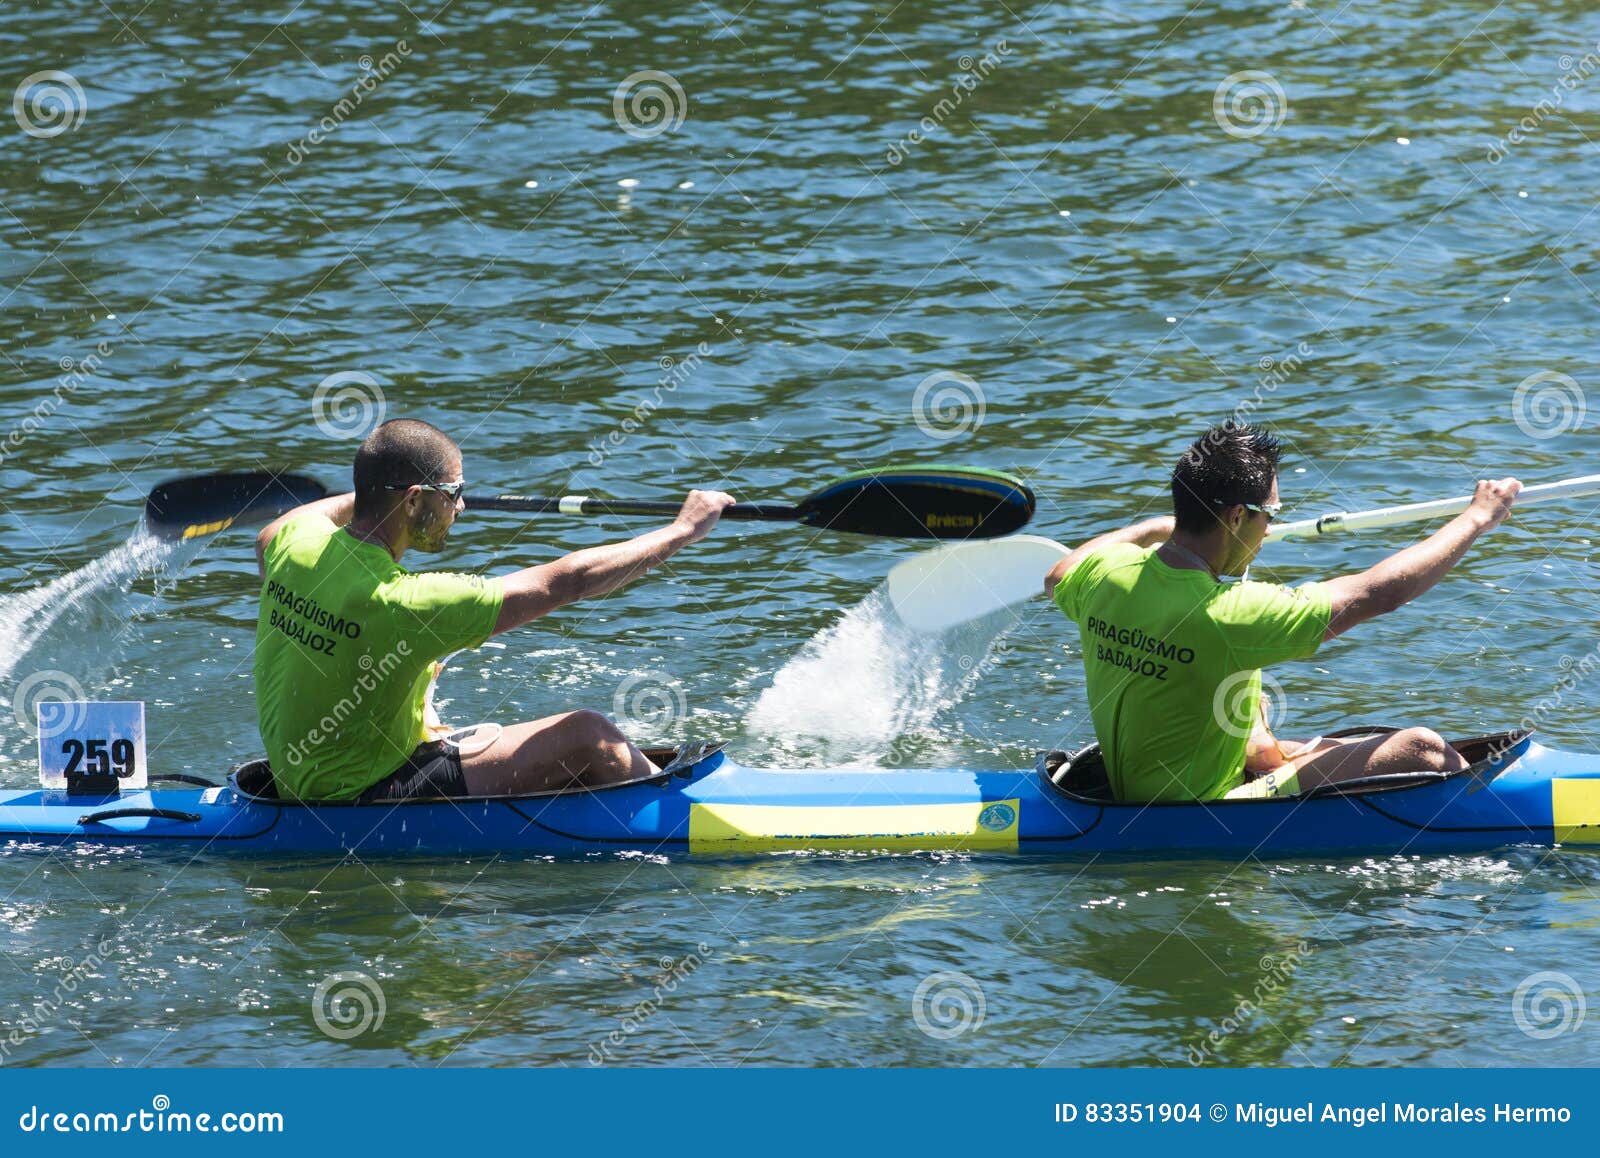 Canoe Marathon Pontevedra Spain May Detail Some Participants Spain Championship Held River Running 83351904 